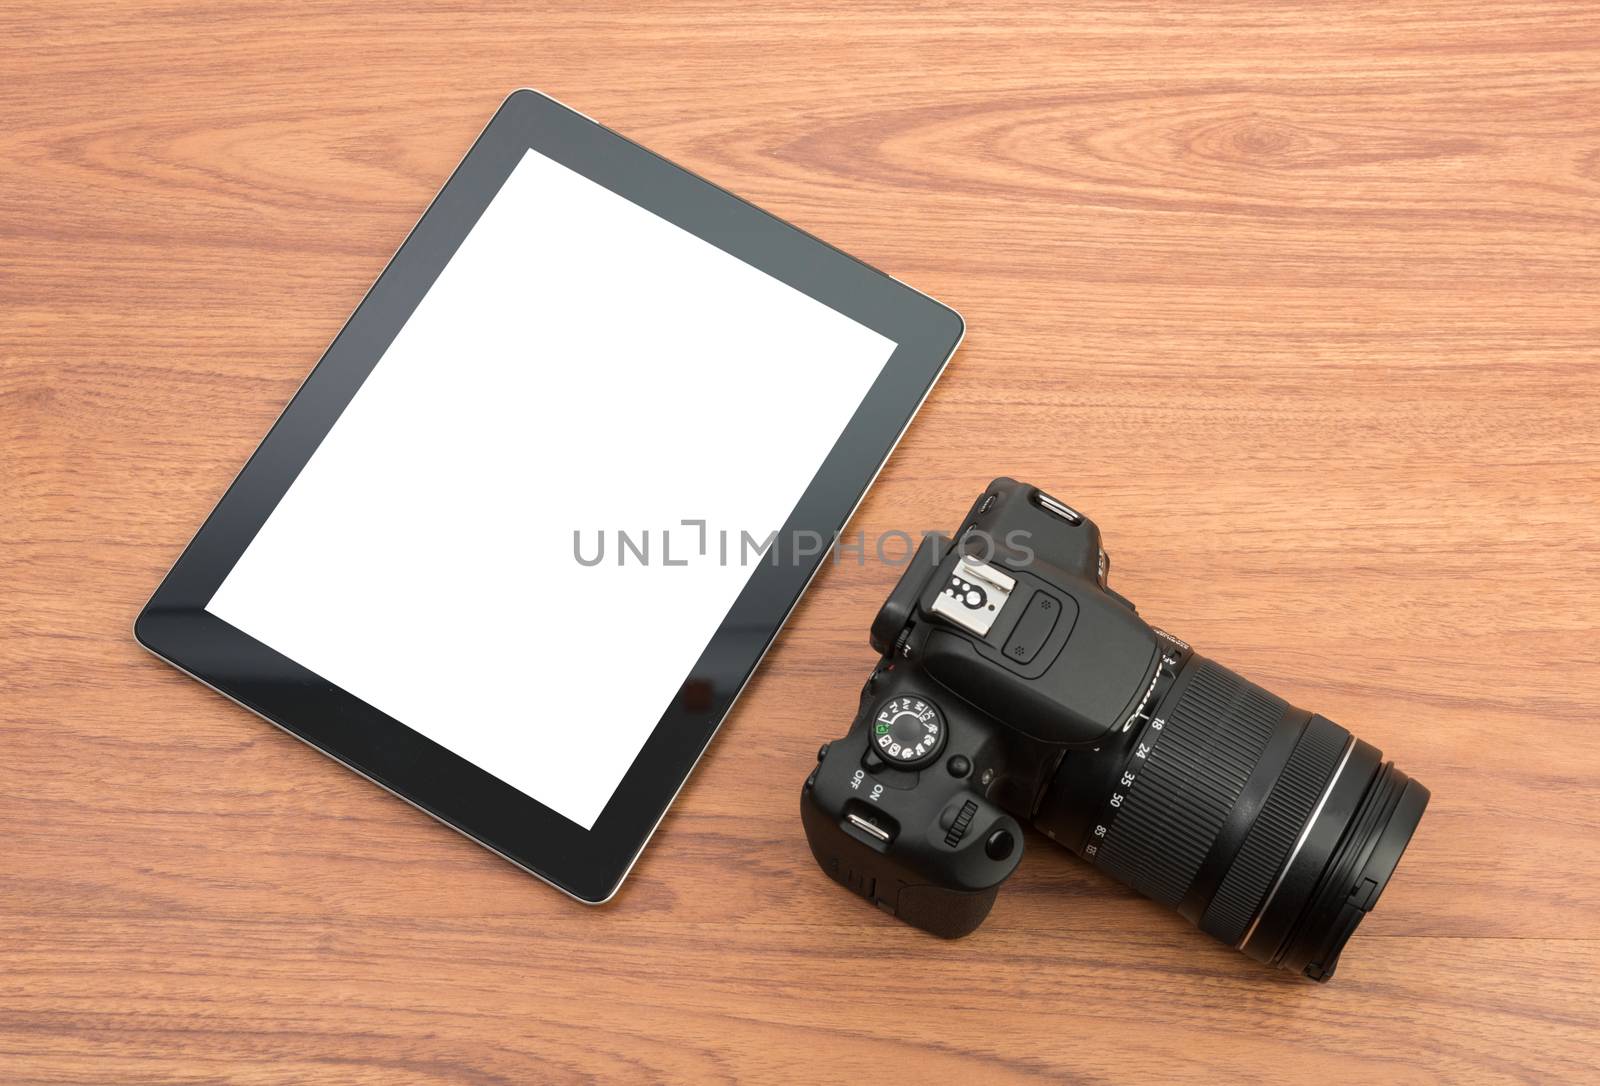 DSLR digital camera and tablet by Sorapop